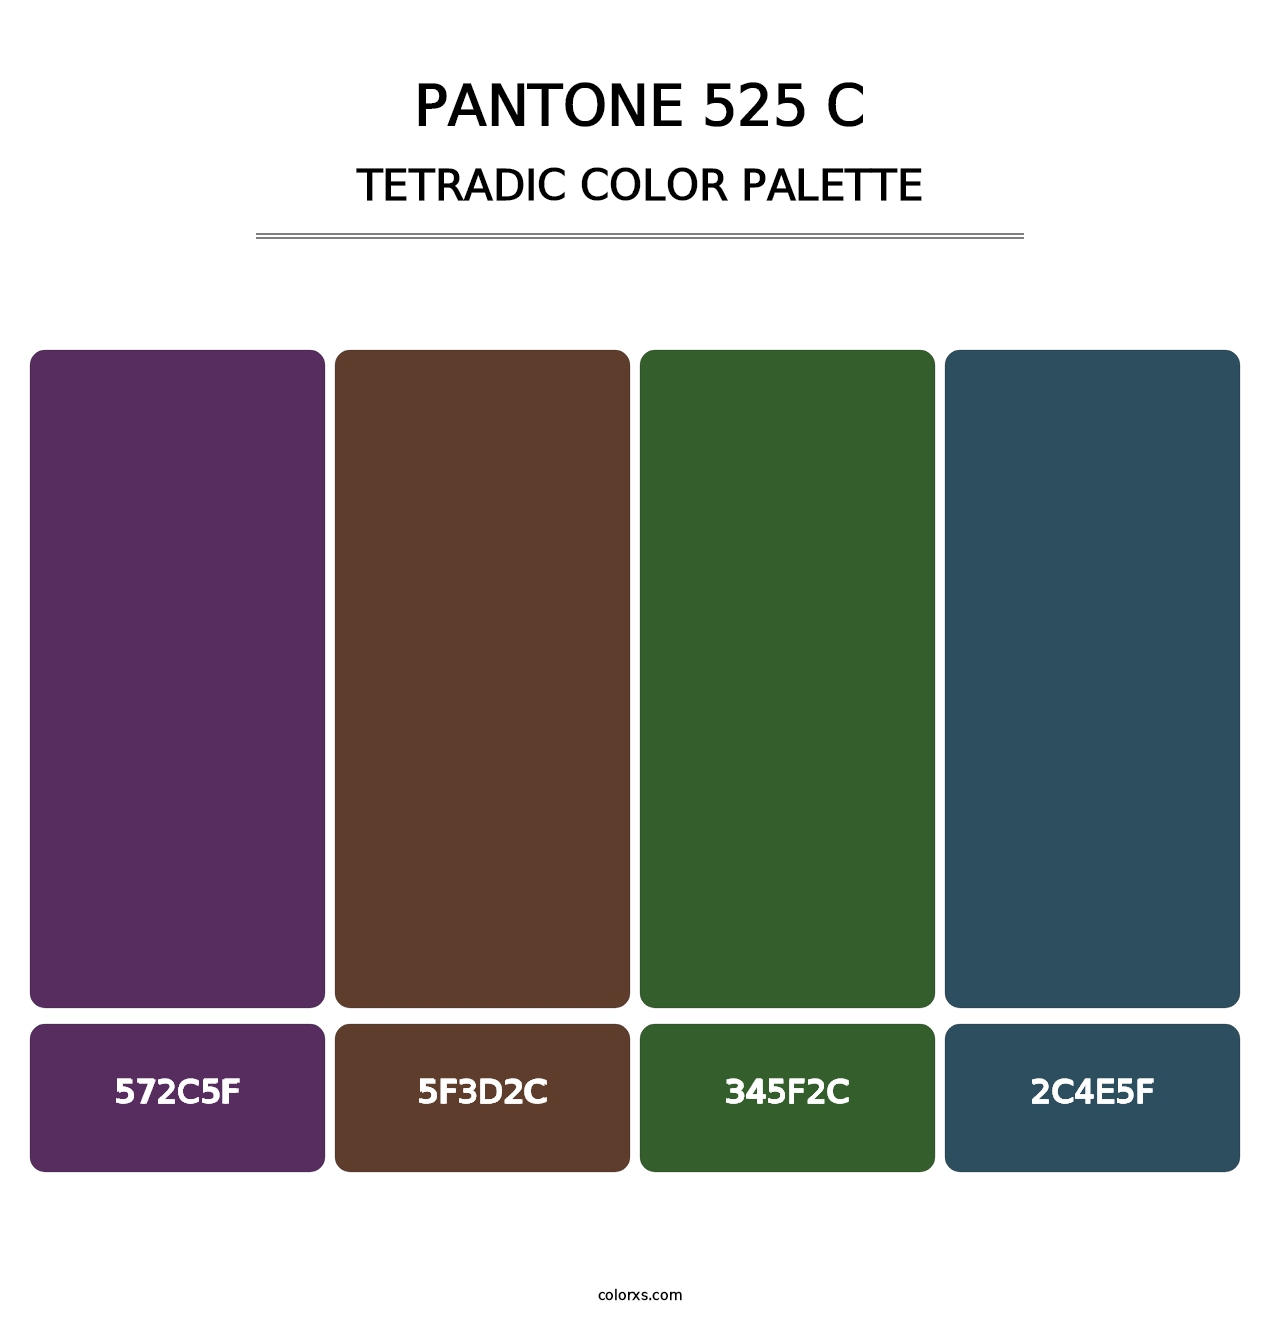 PANTONE 525 C - Tetradic Color Palette